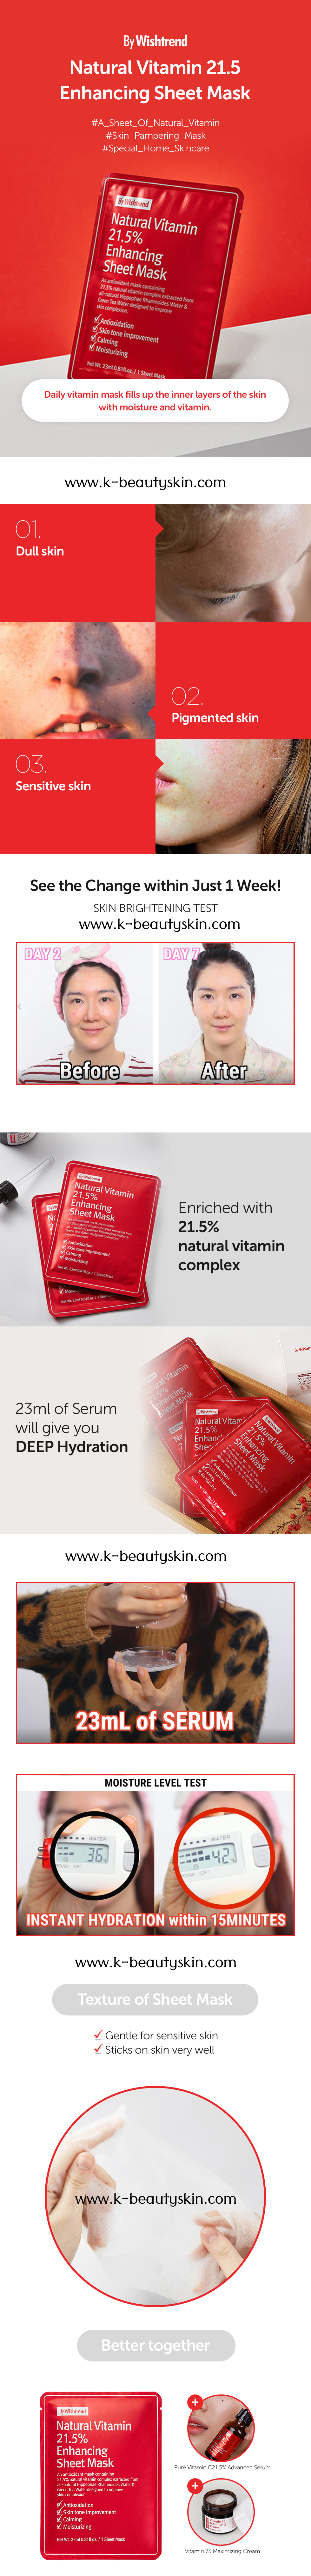 provide gentle vitamin care for sensitive skin. 